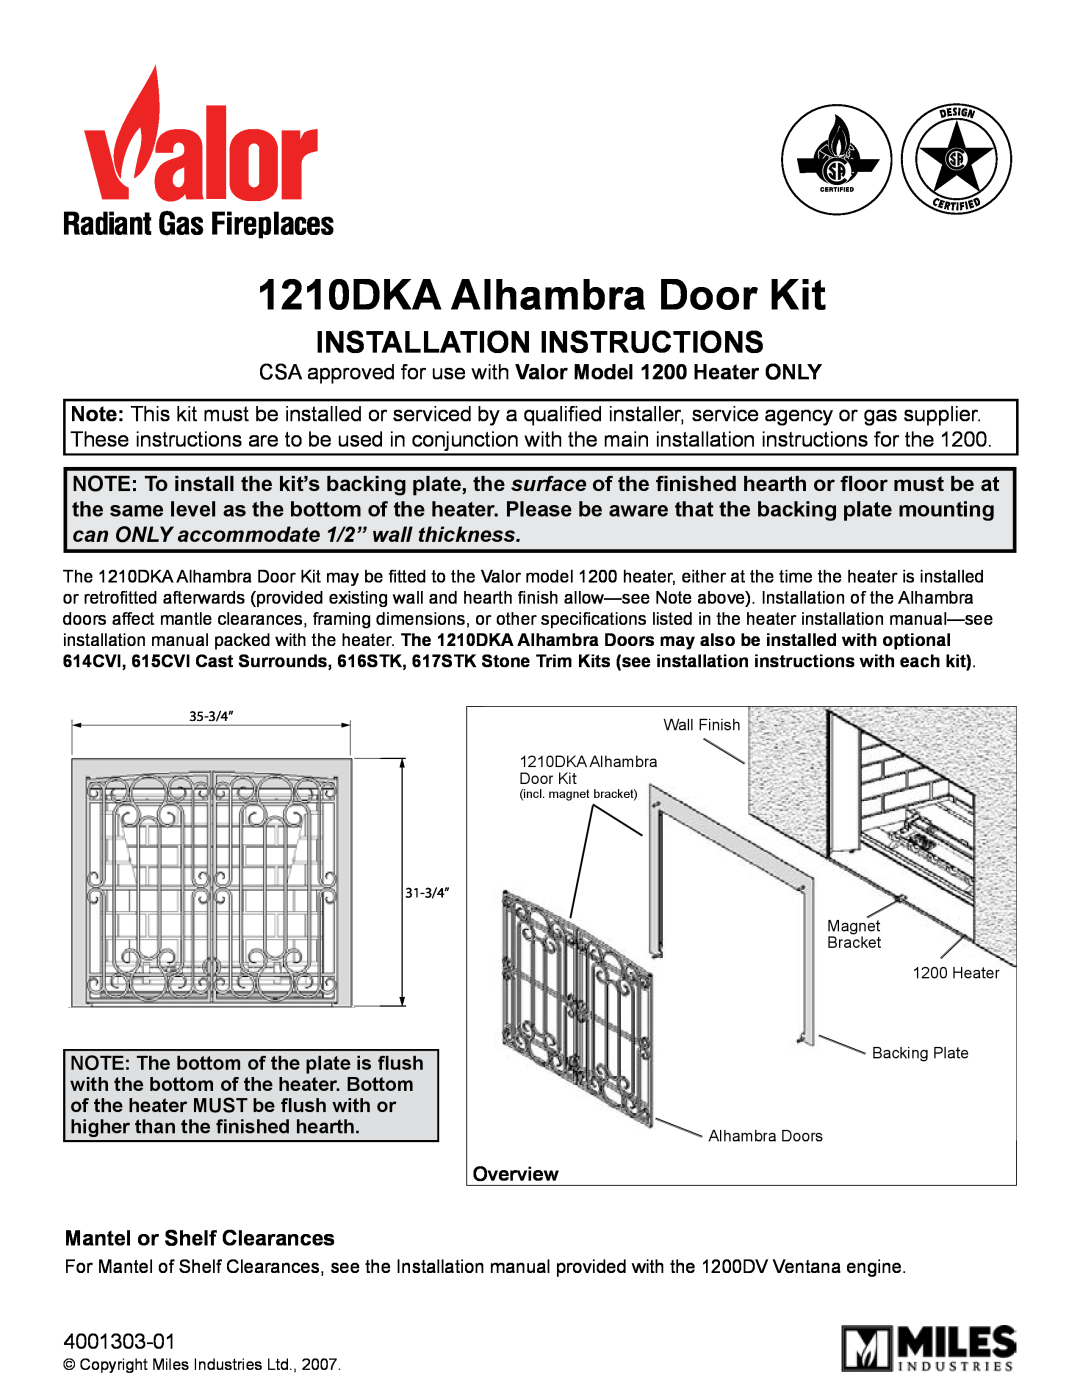 Valor Auto Companion Inc installation instructions 1210DKA Alhambra Door Kit, Installation Instructions, Overview 